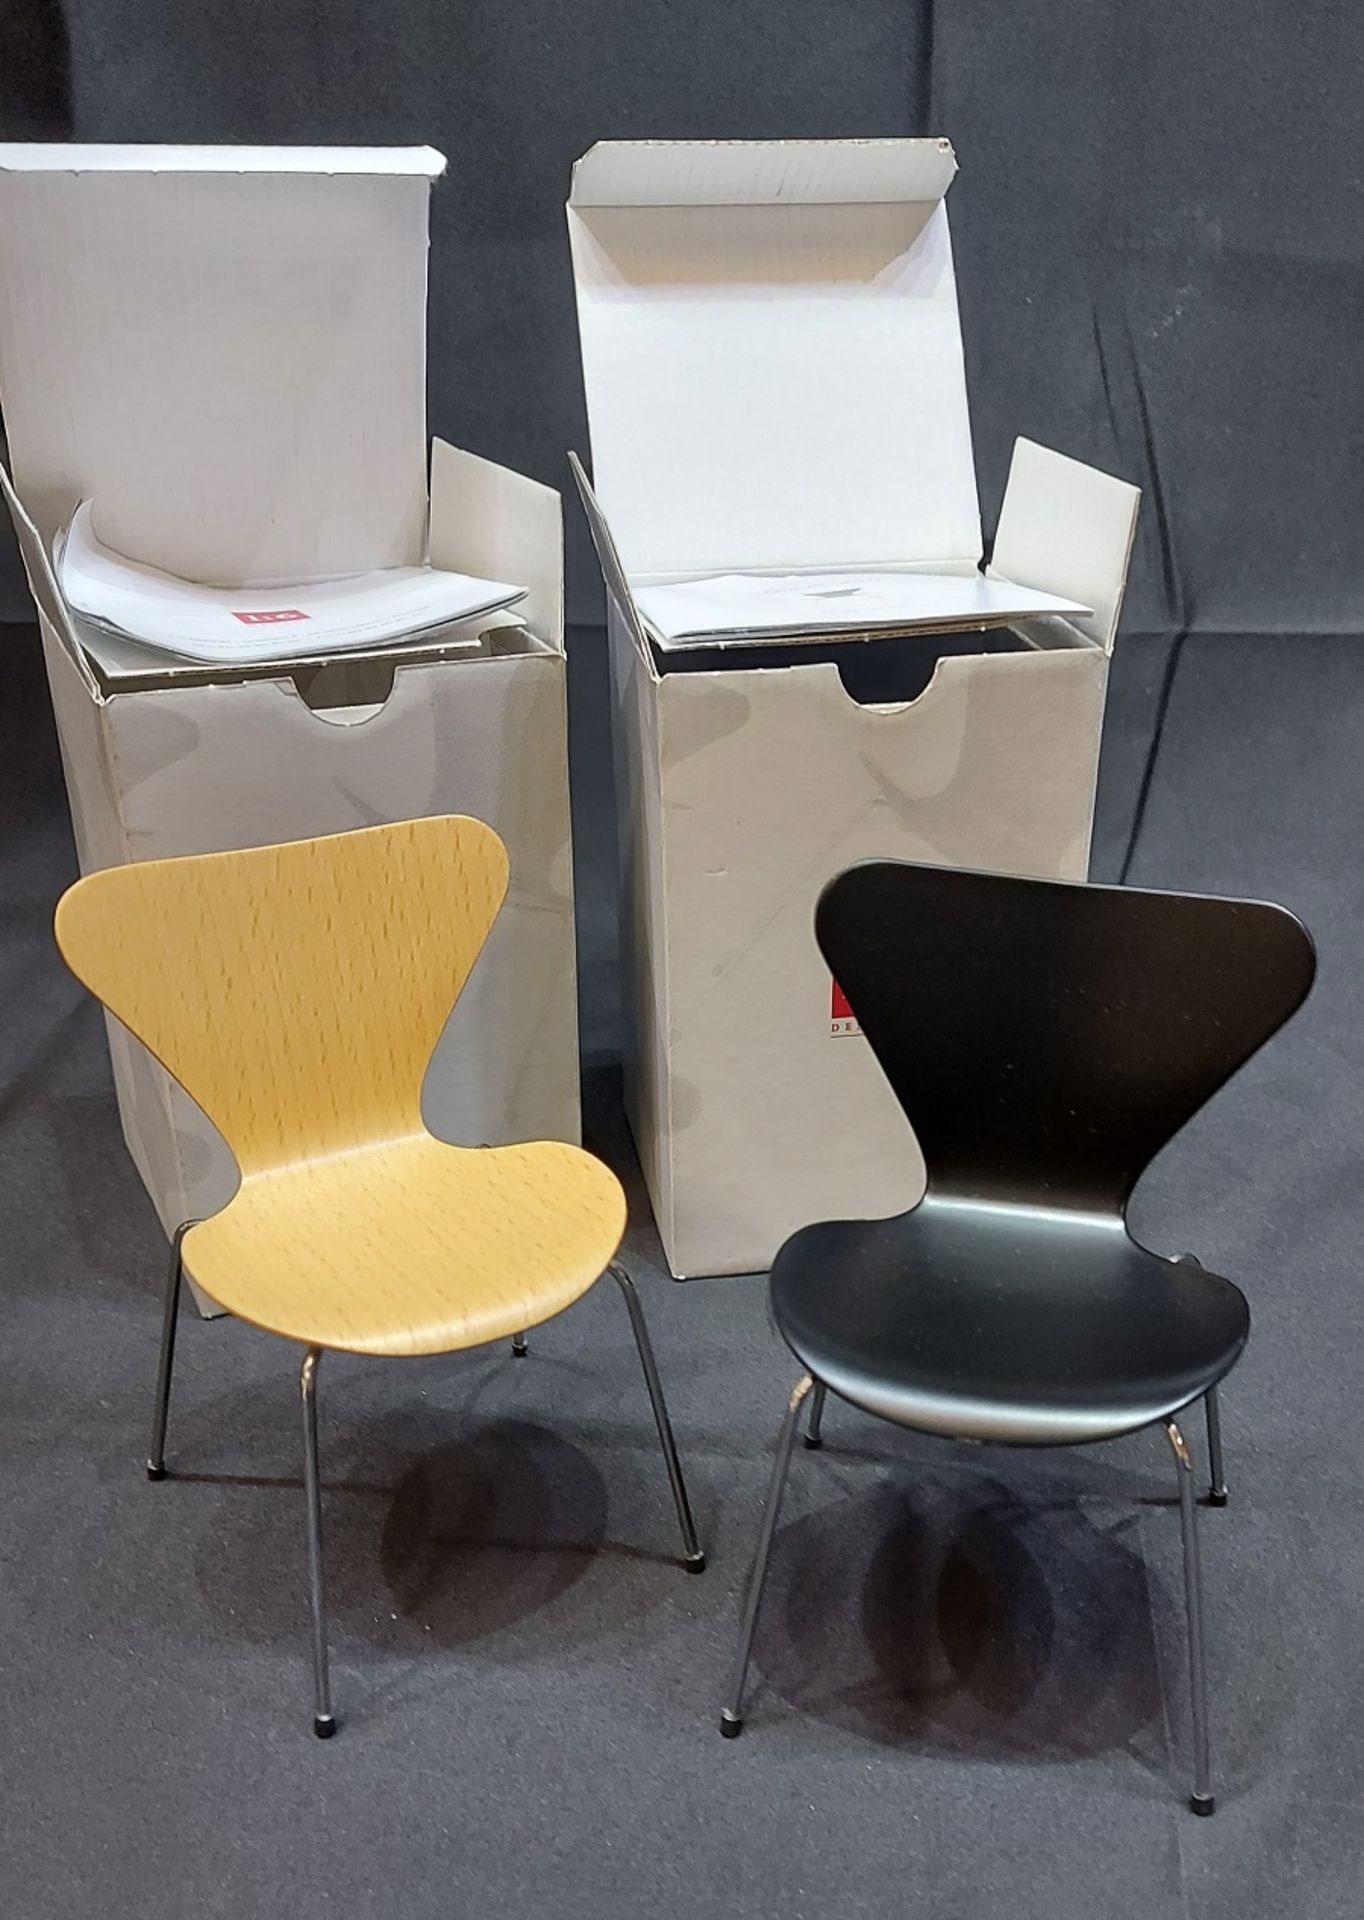 Sammlerstücke! 2 Stk. Arne Jacobsen Museum Miniatur Stuhl Kollektion 1x buche 1x schwarz